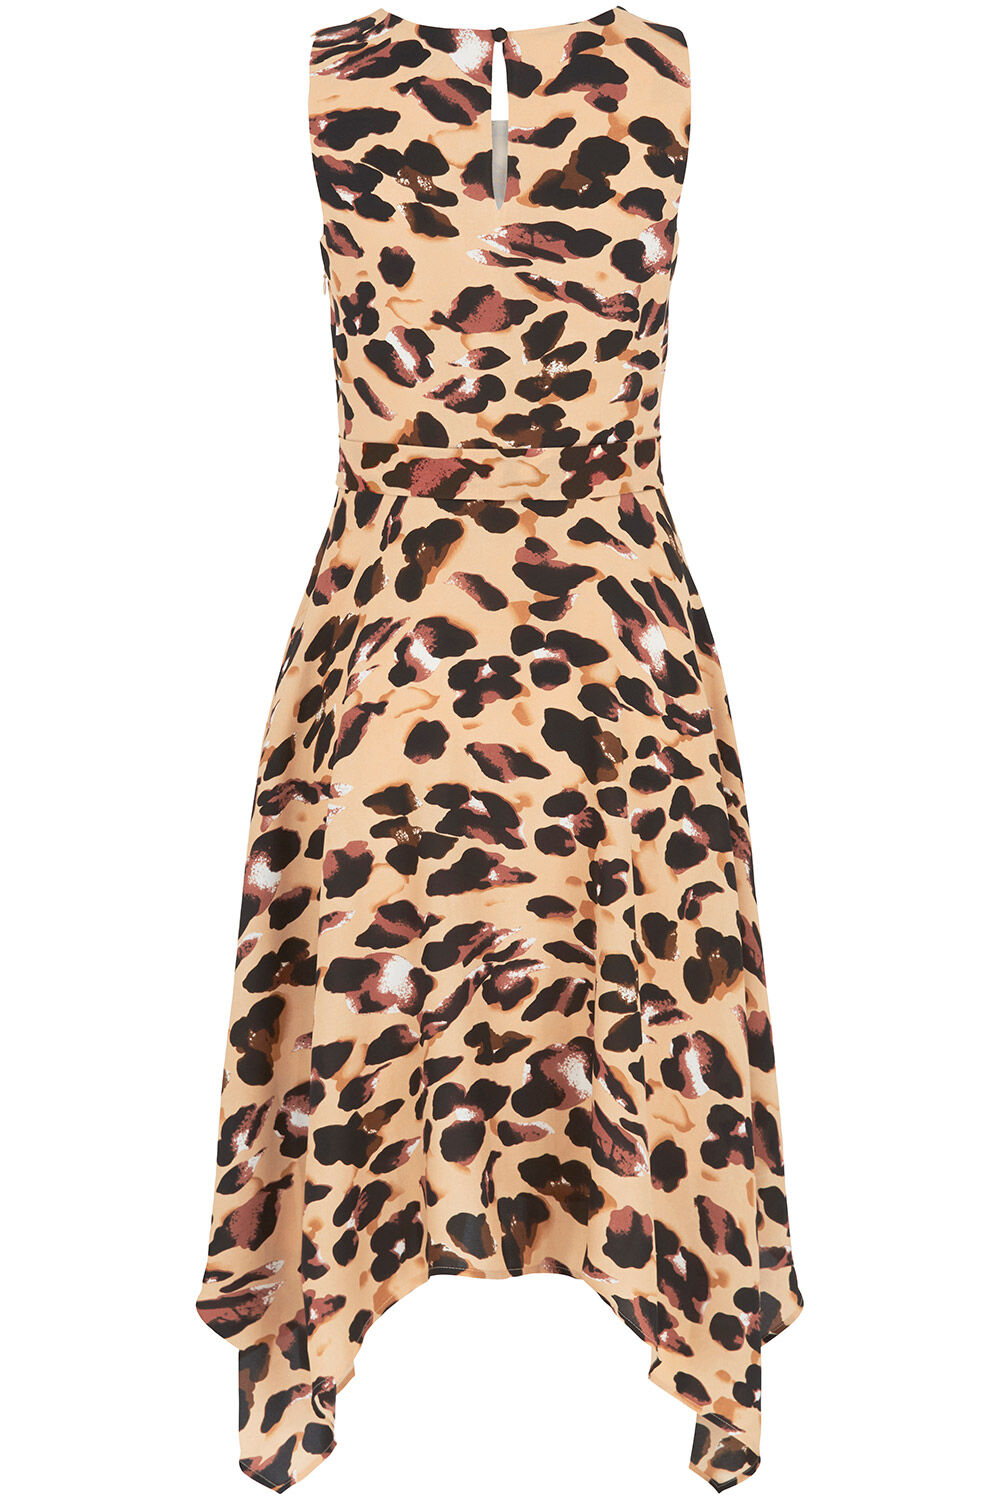 bon marche leopard print dress